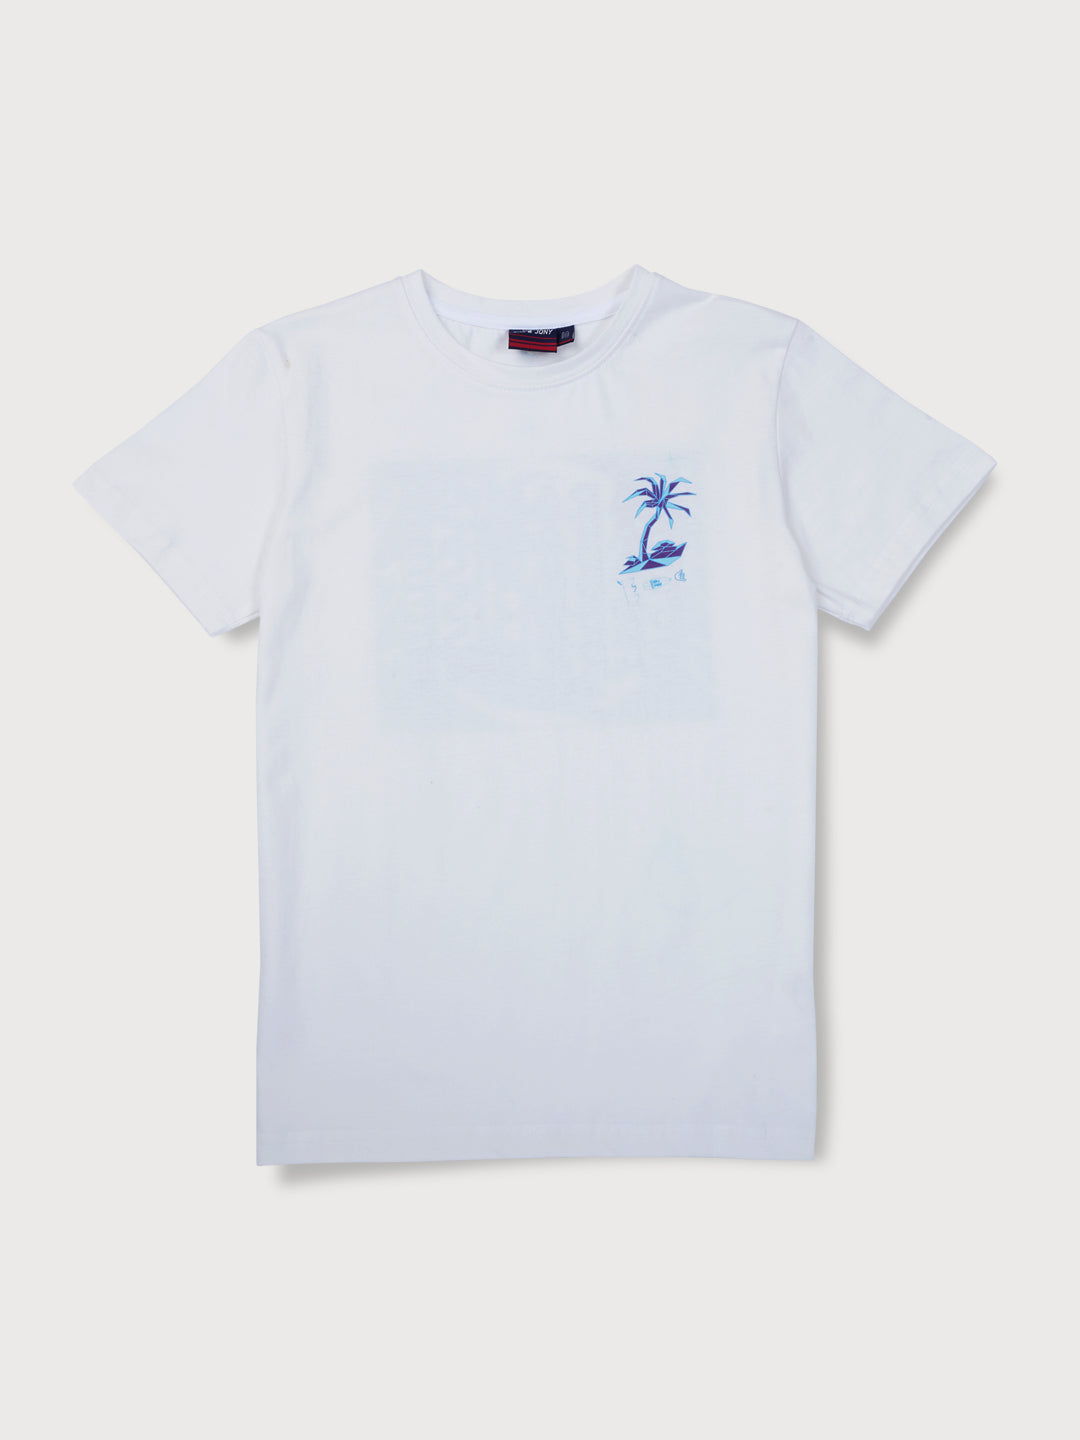 Boys Off White Printed Knits T-Shirt